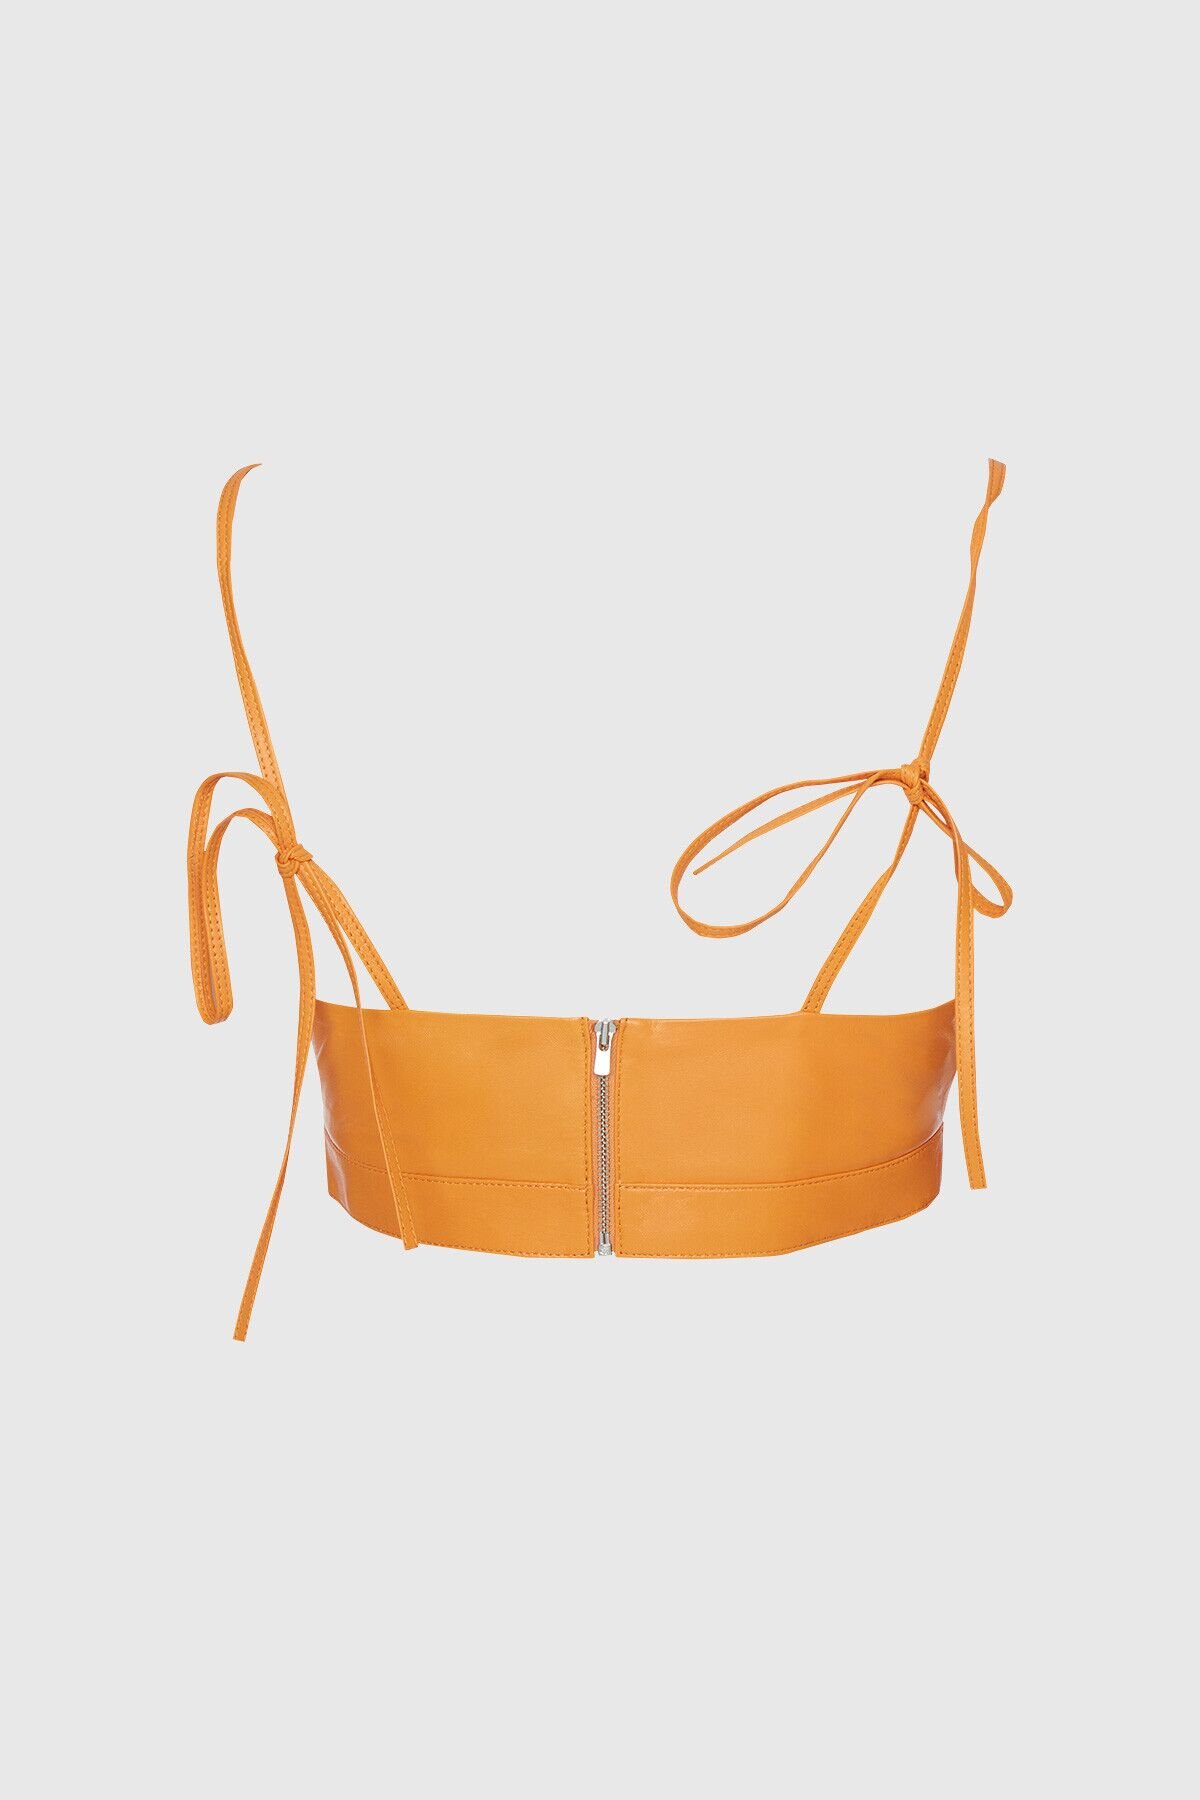 Rope Tie Strap Orange Blouse